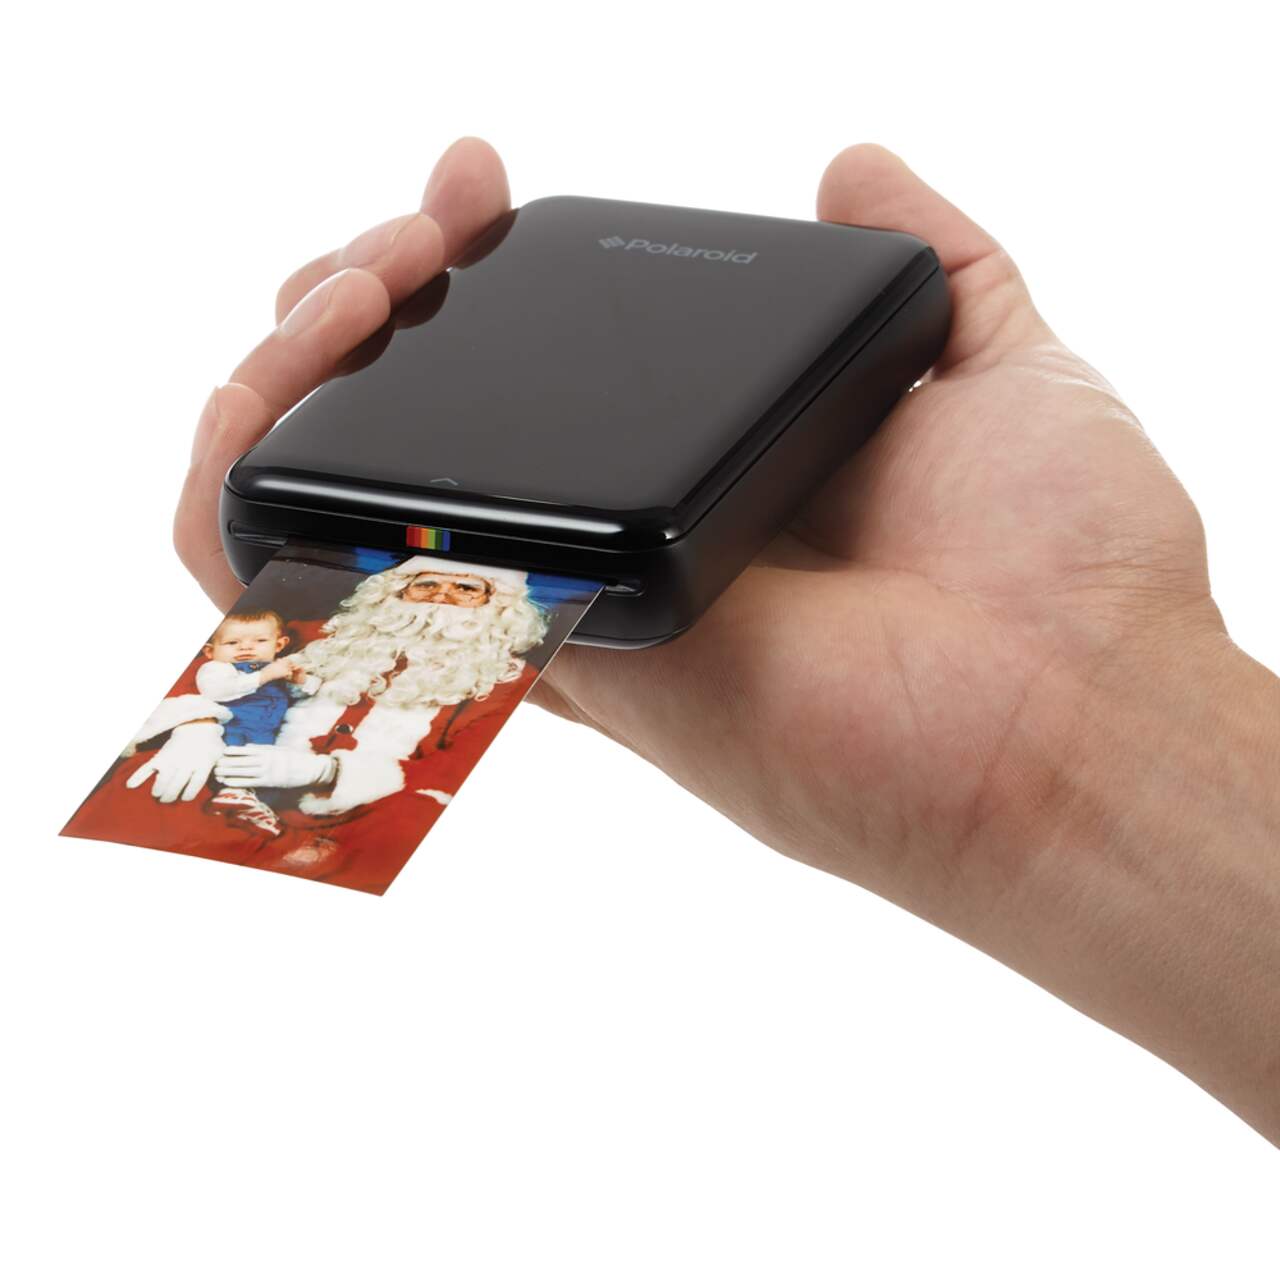 Polaroid ZIP Mobile Photo Printer: My Latest Gadget, and It's SO